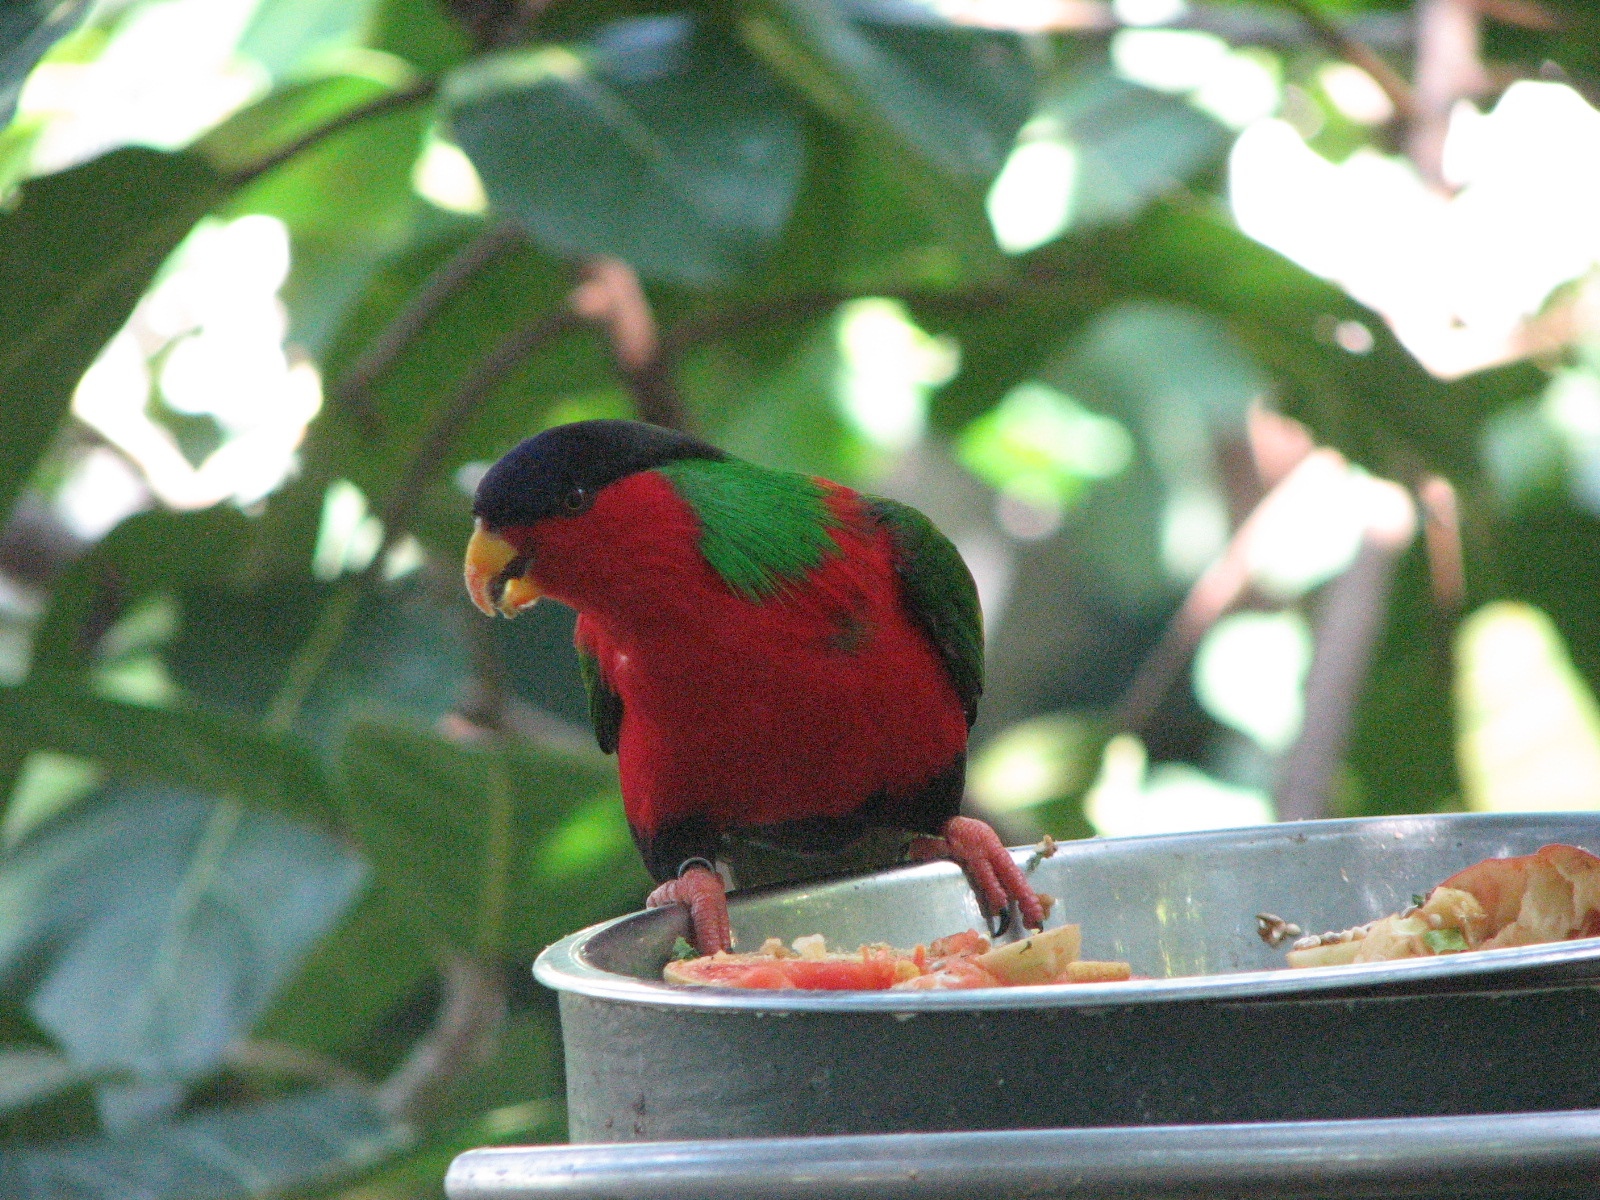 San diego zoo bird